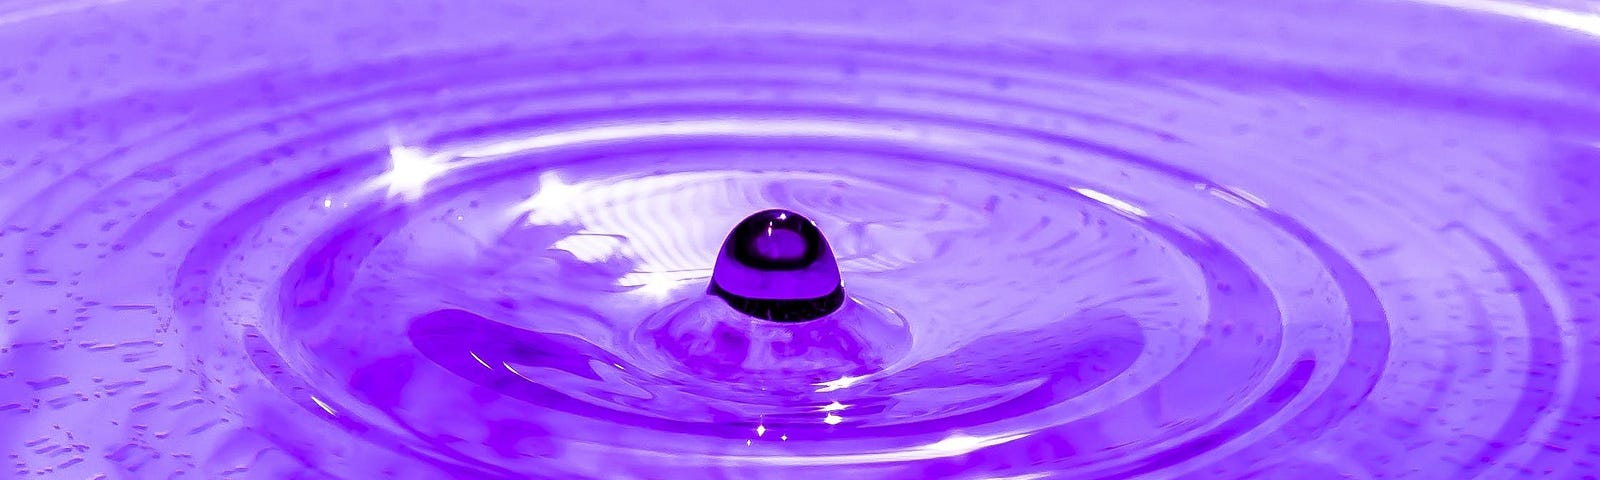 Purple ripples in water